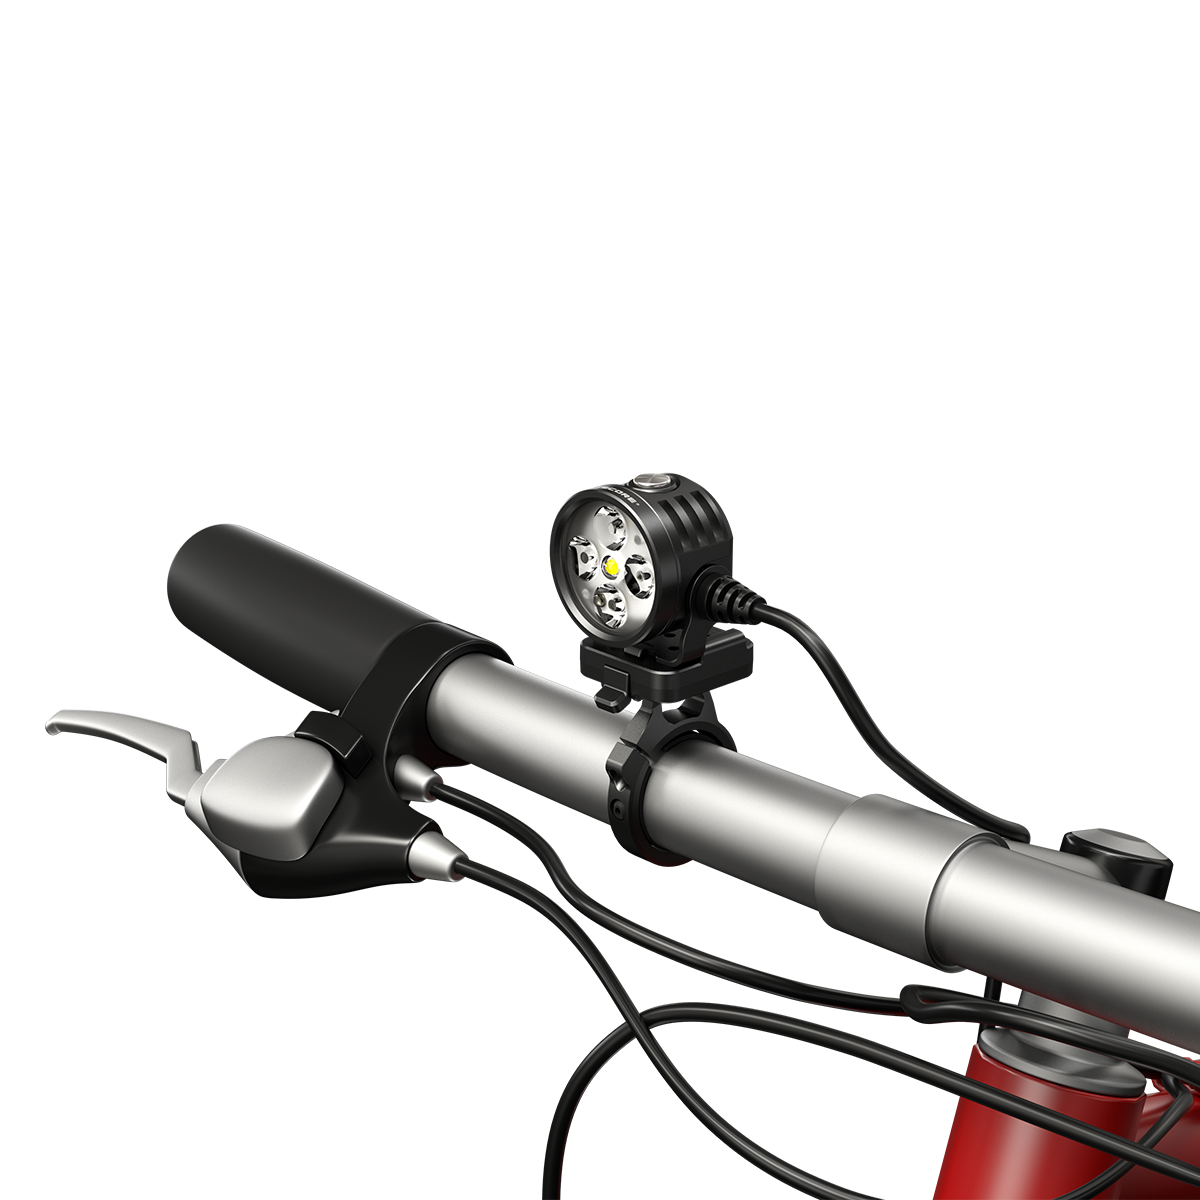 NITECORE Biking Accessories For Hu60 Headlamp Bike Mount And Helmet Strap